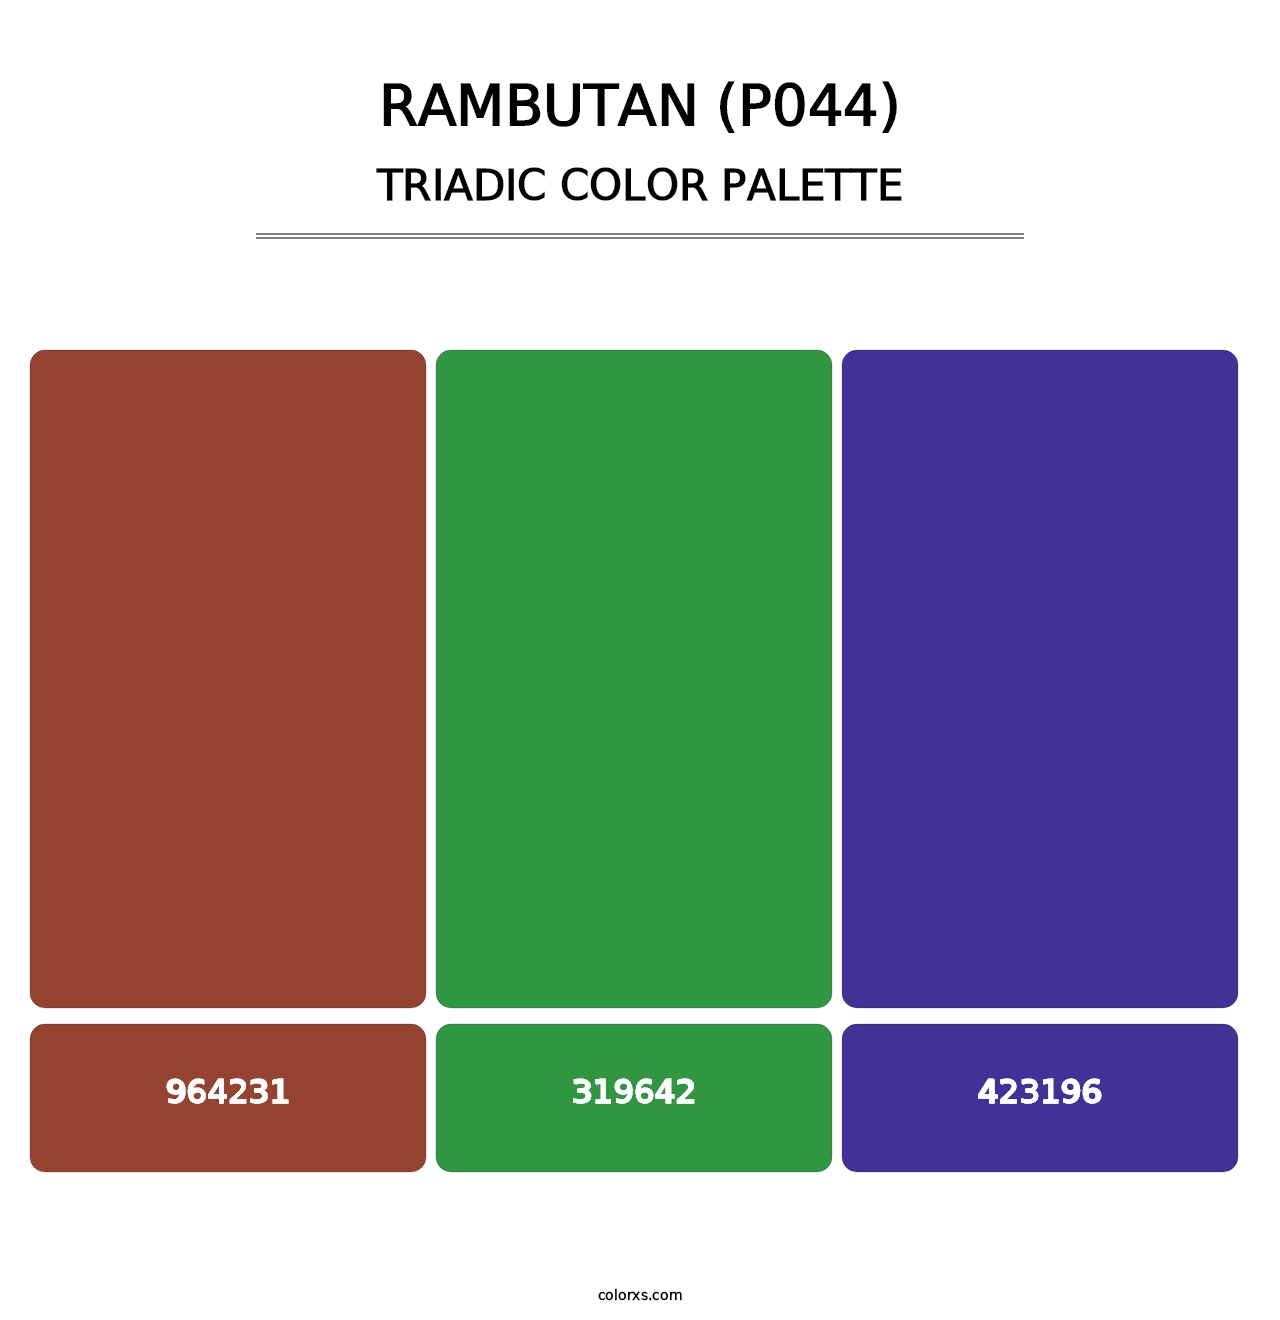 Rambutan (P044) - Triadic Color Palette